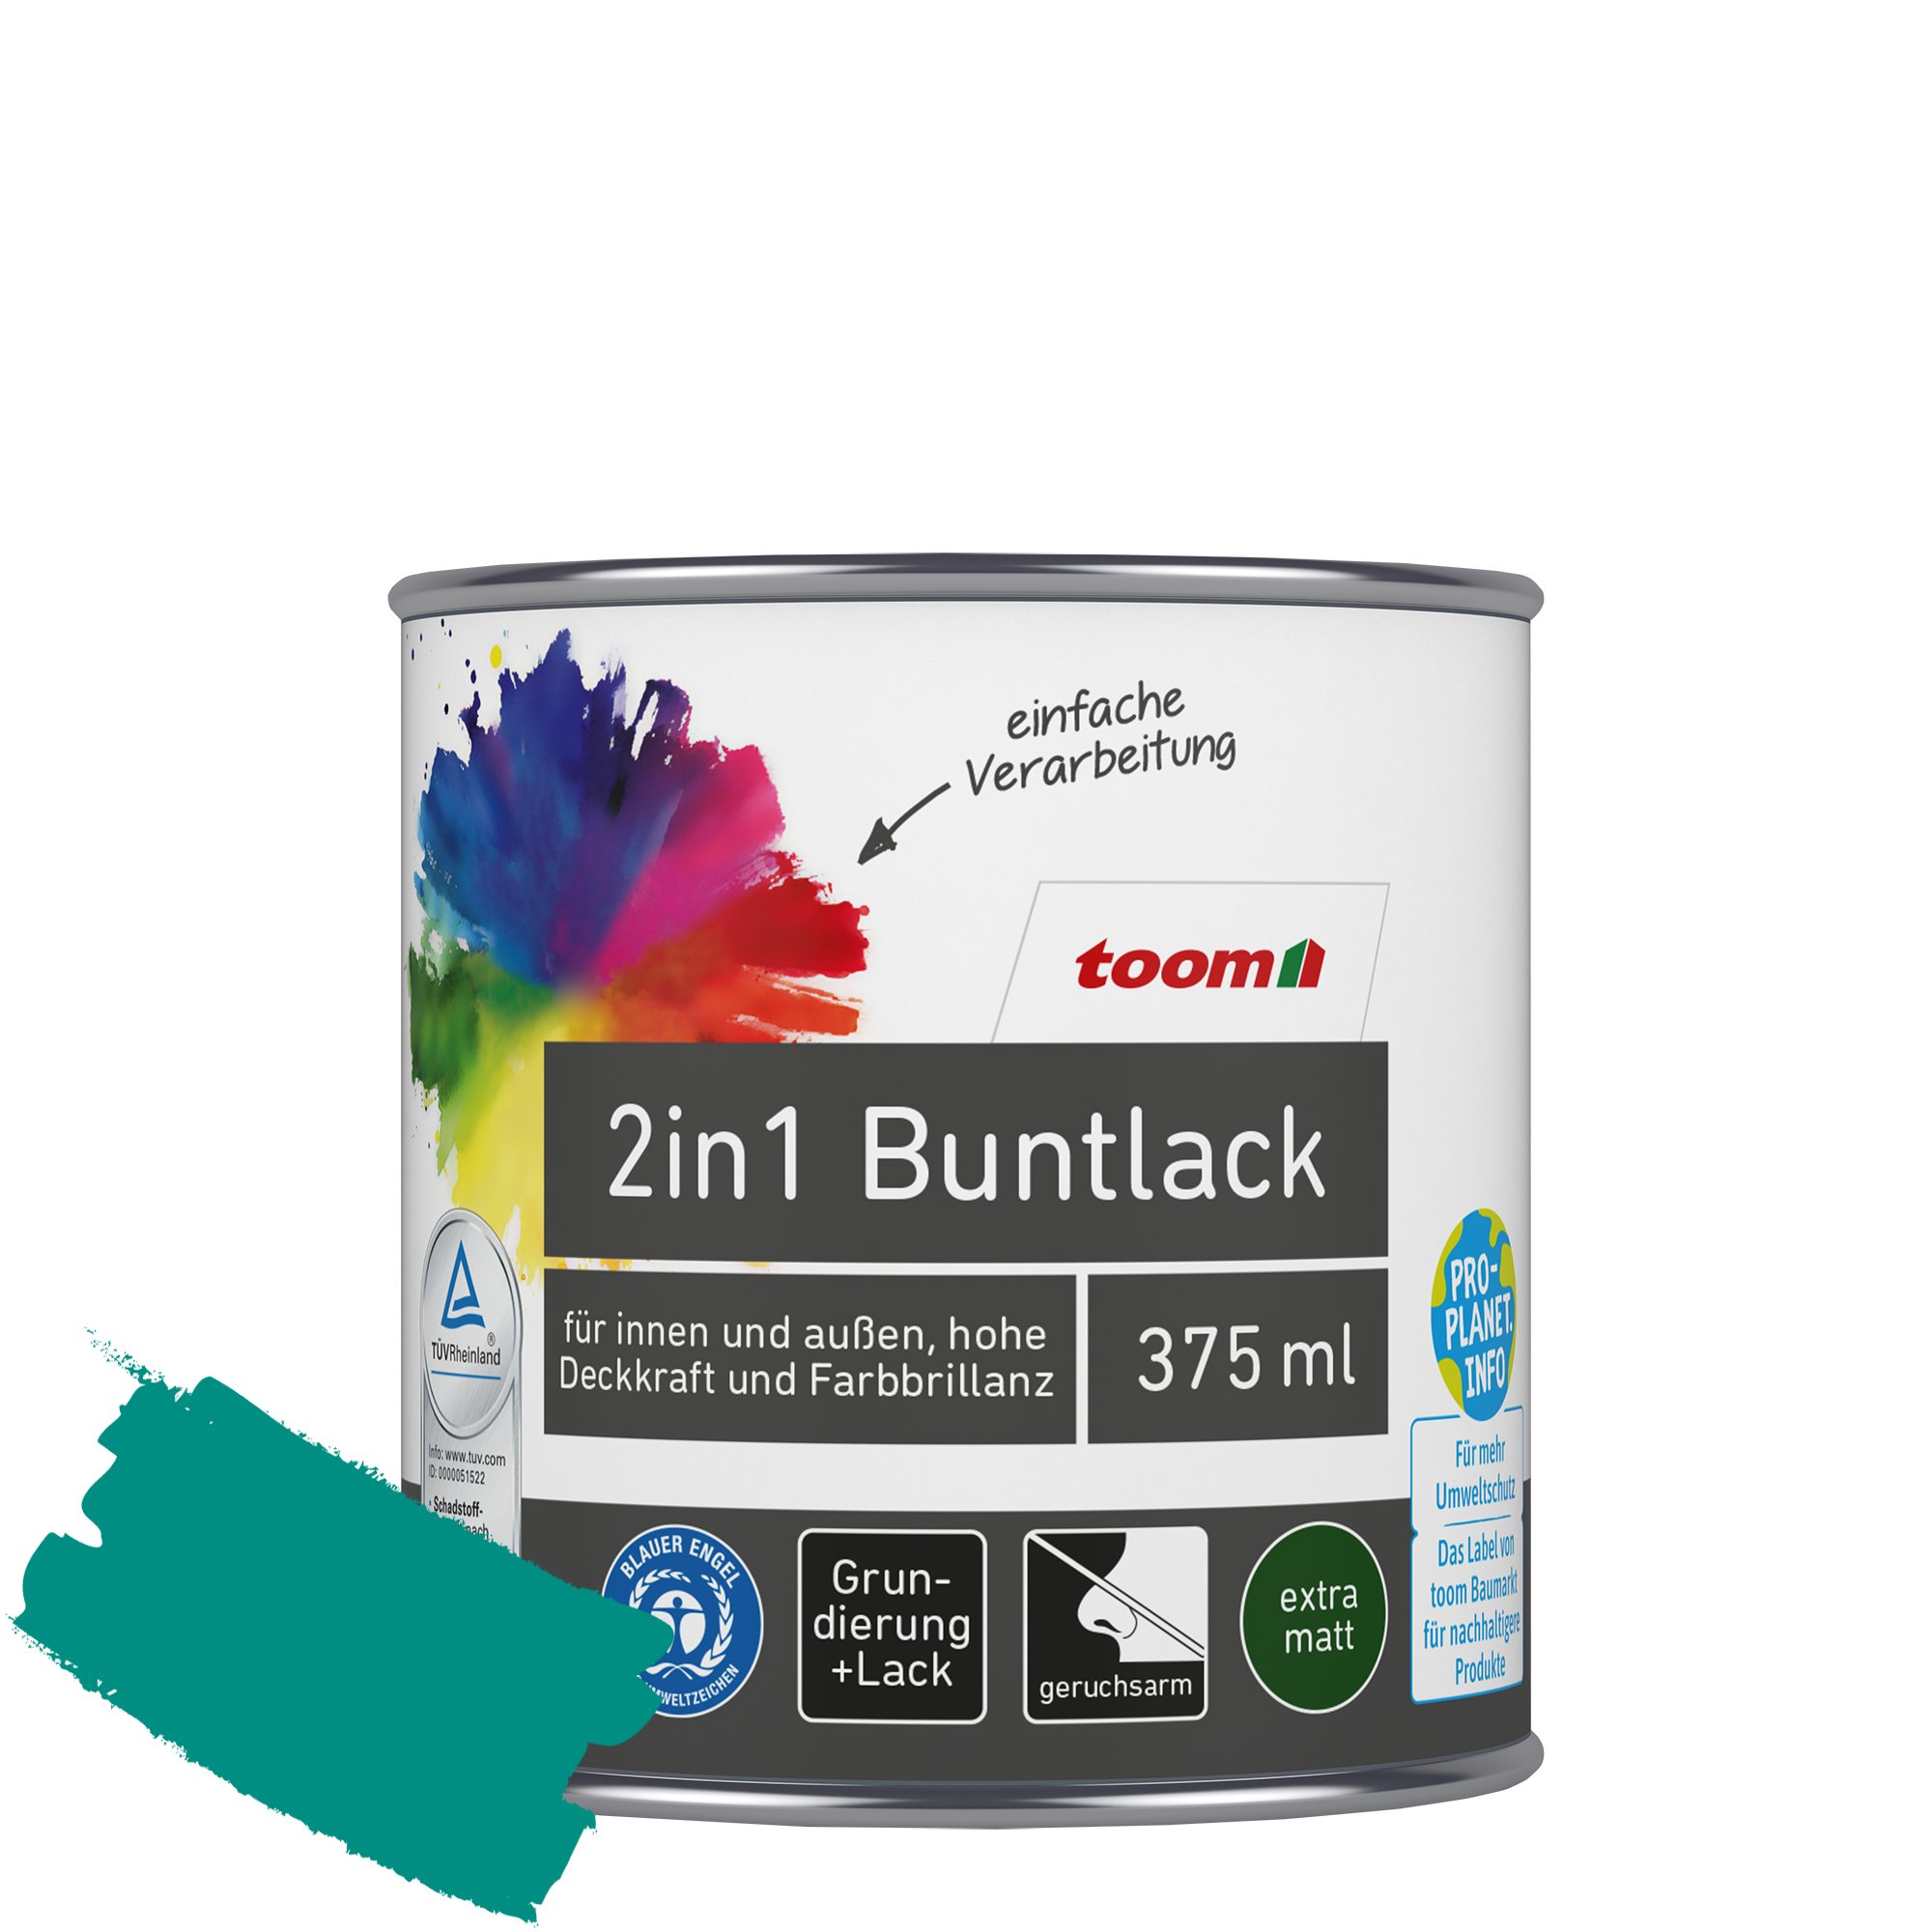 2in1 Buntlack 'Südseetraum' petrolfarben matt 375 ml + product picture